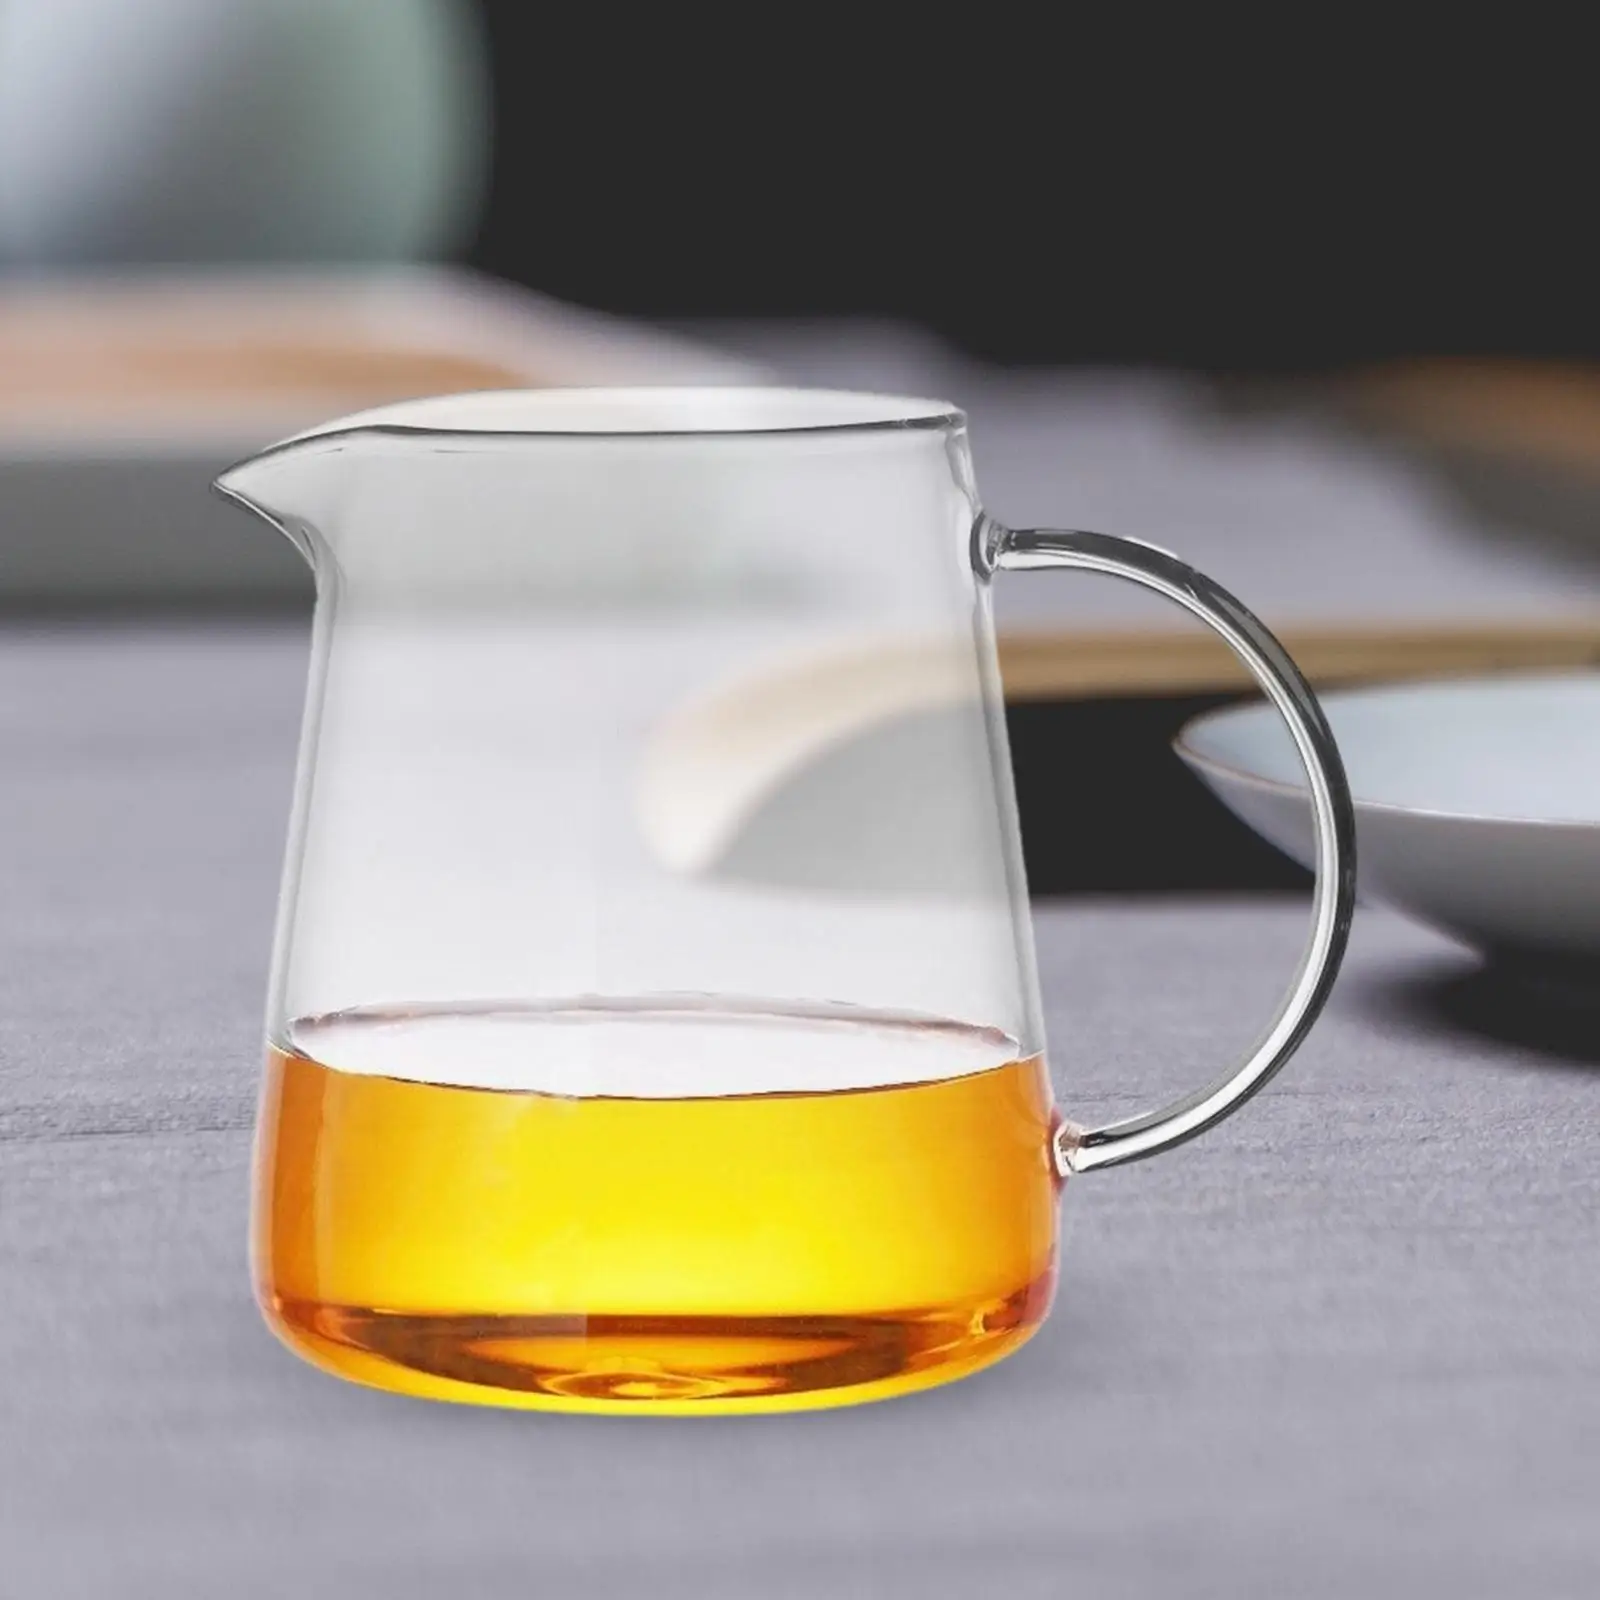 17oz Glass Teapot Multipurpose Heat Resistant Comfortable Handle Office Tea Kettle for Juice Flower Tea Loose Leaf Gifts